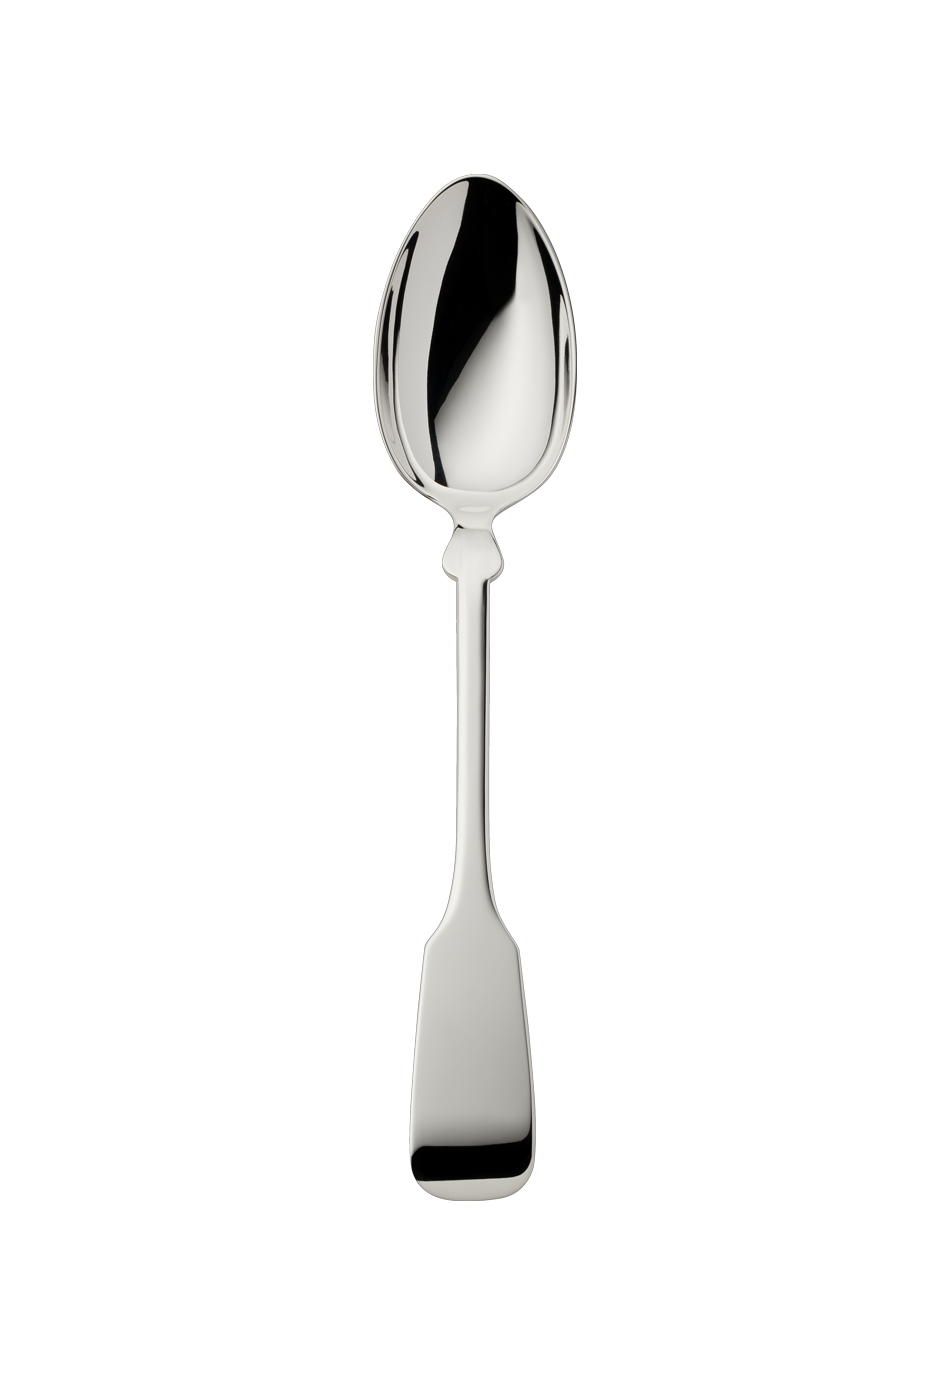 Spaten Table Spoon (150g massive silverplated)